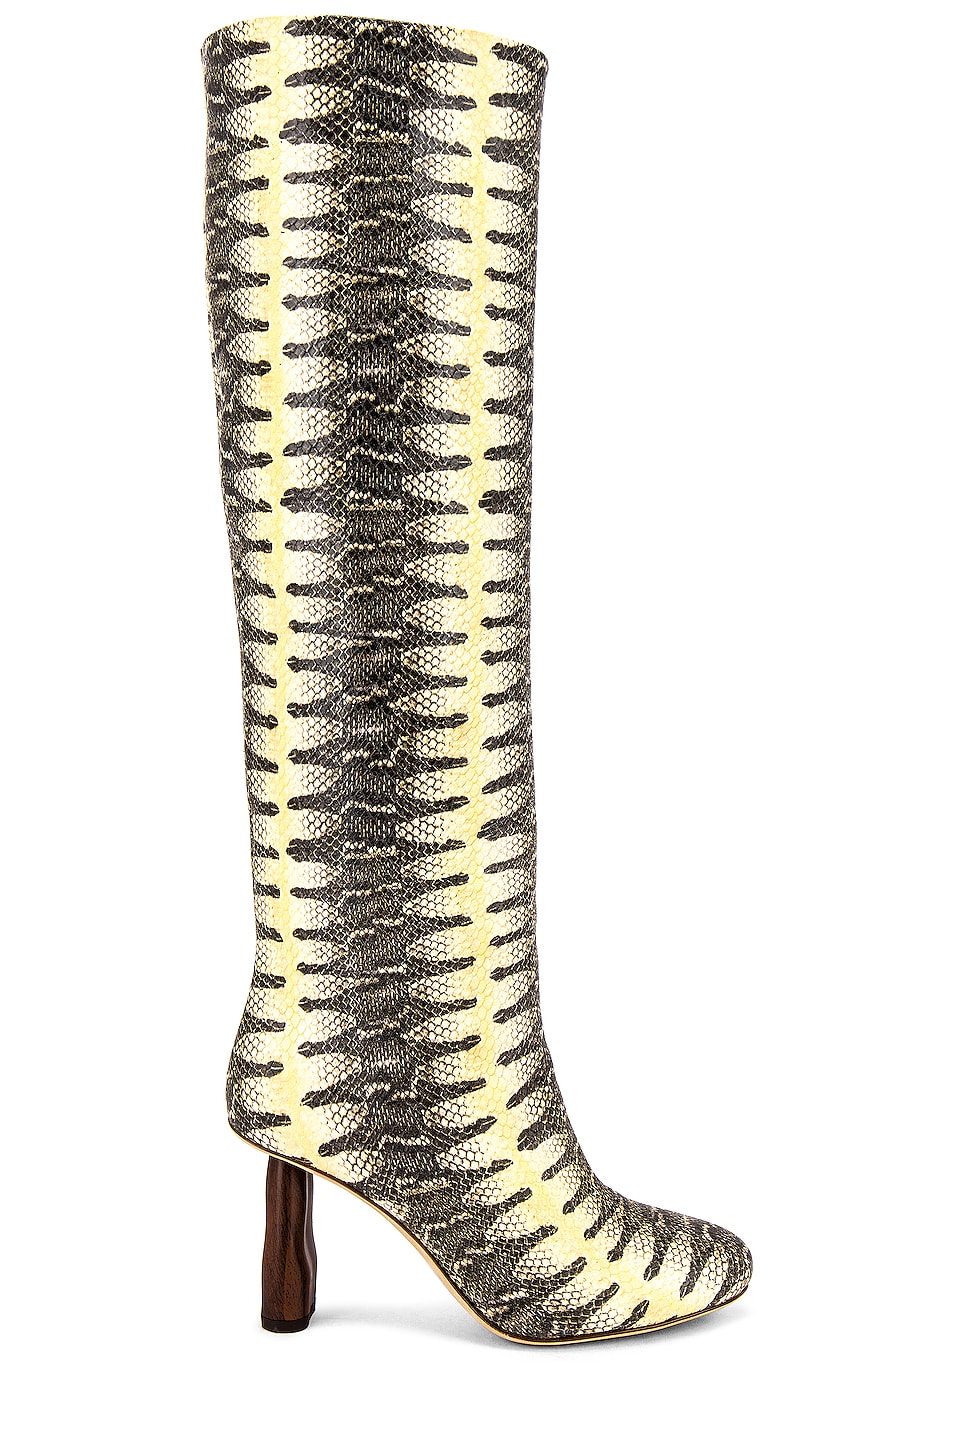 revolve snakeskin boots